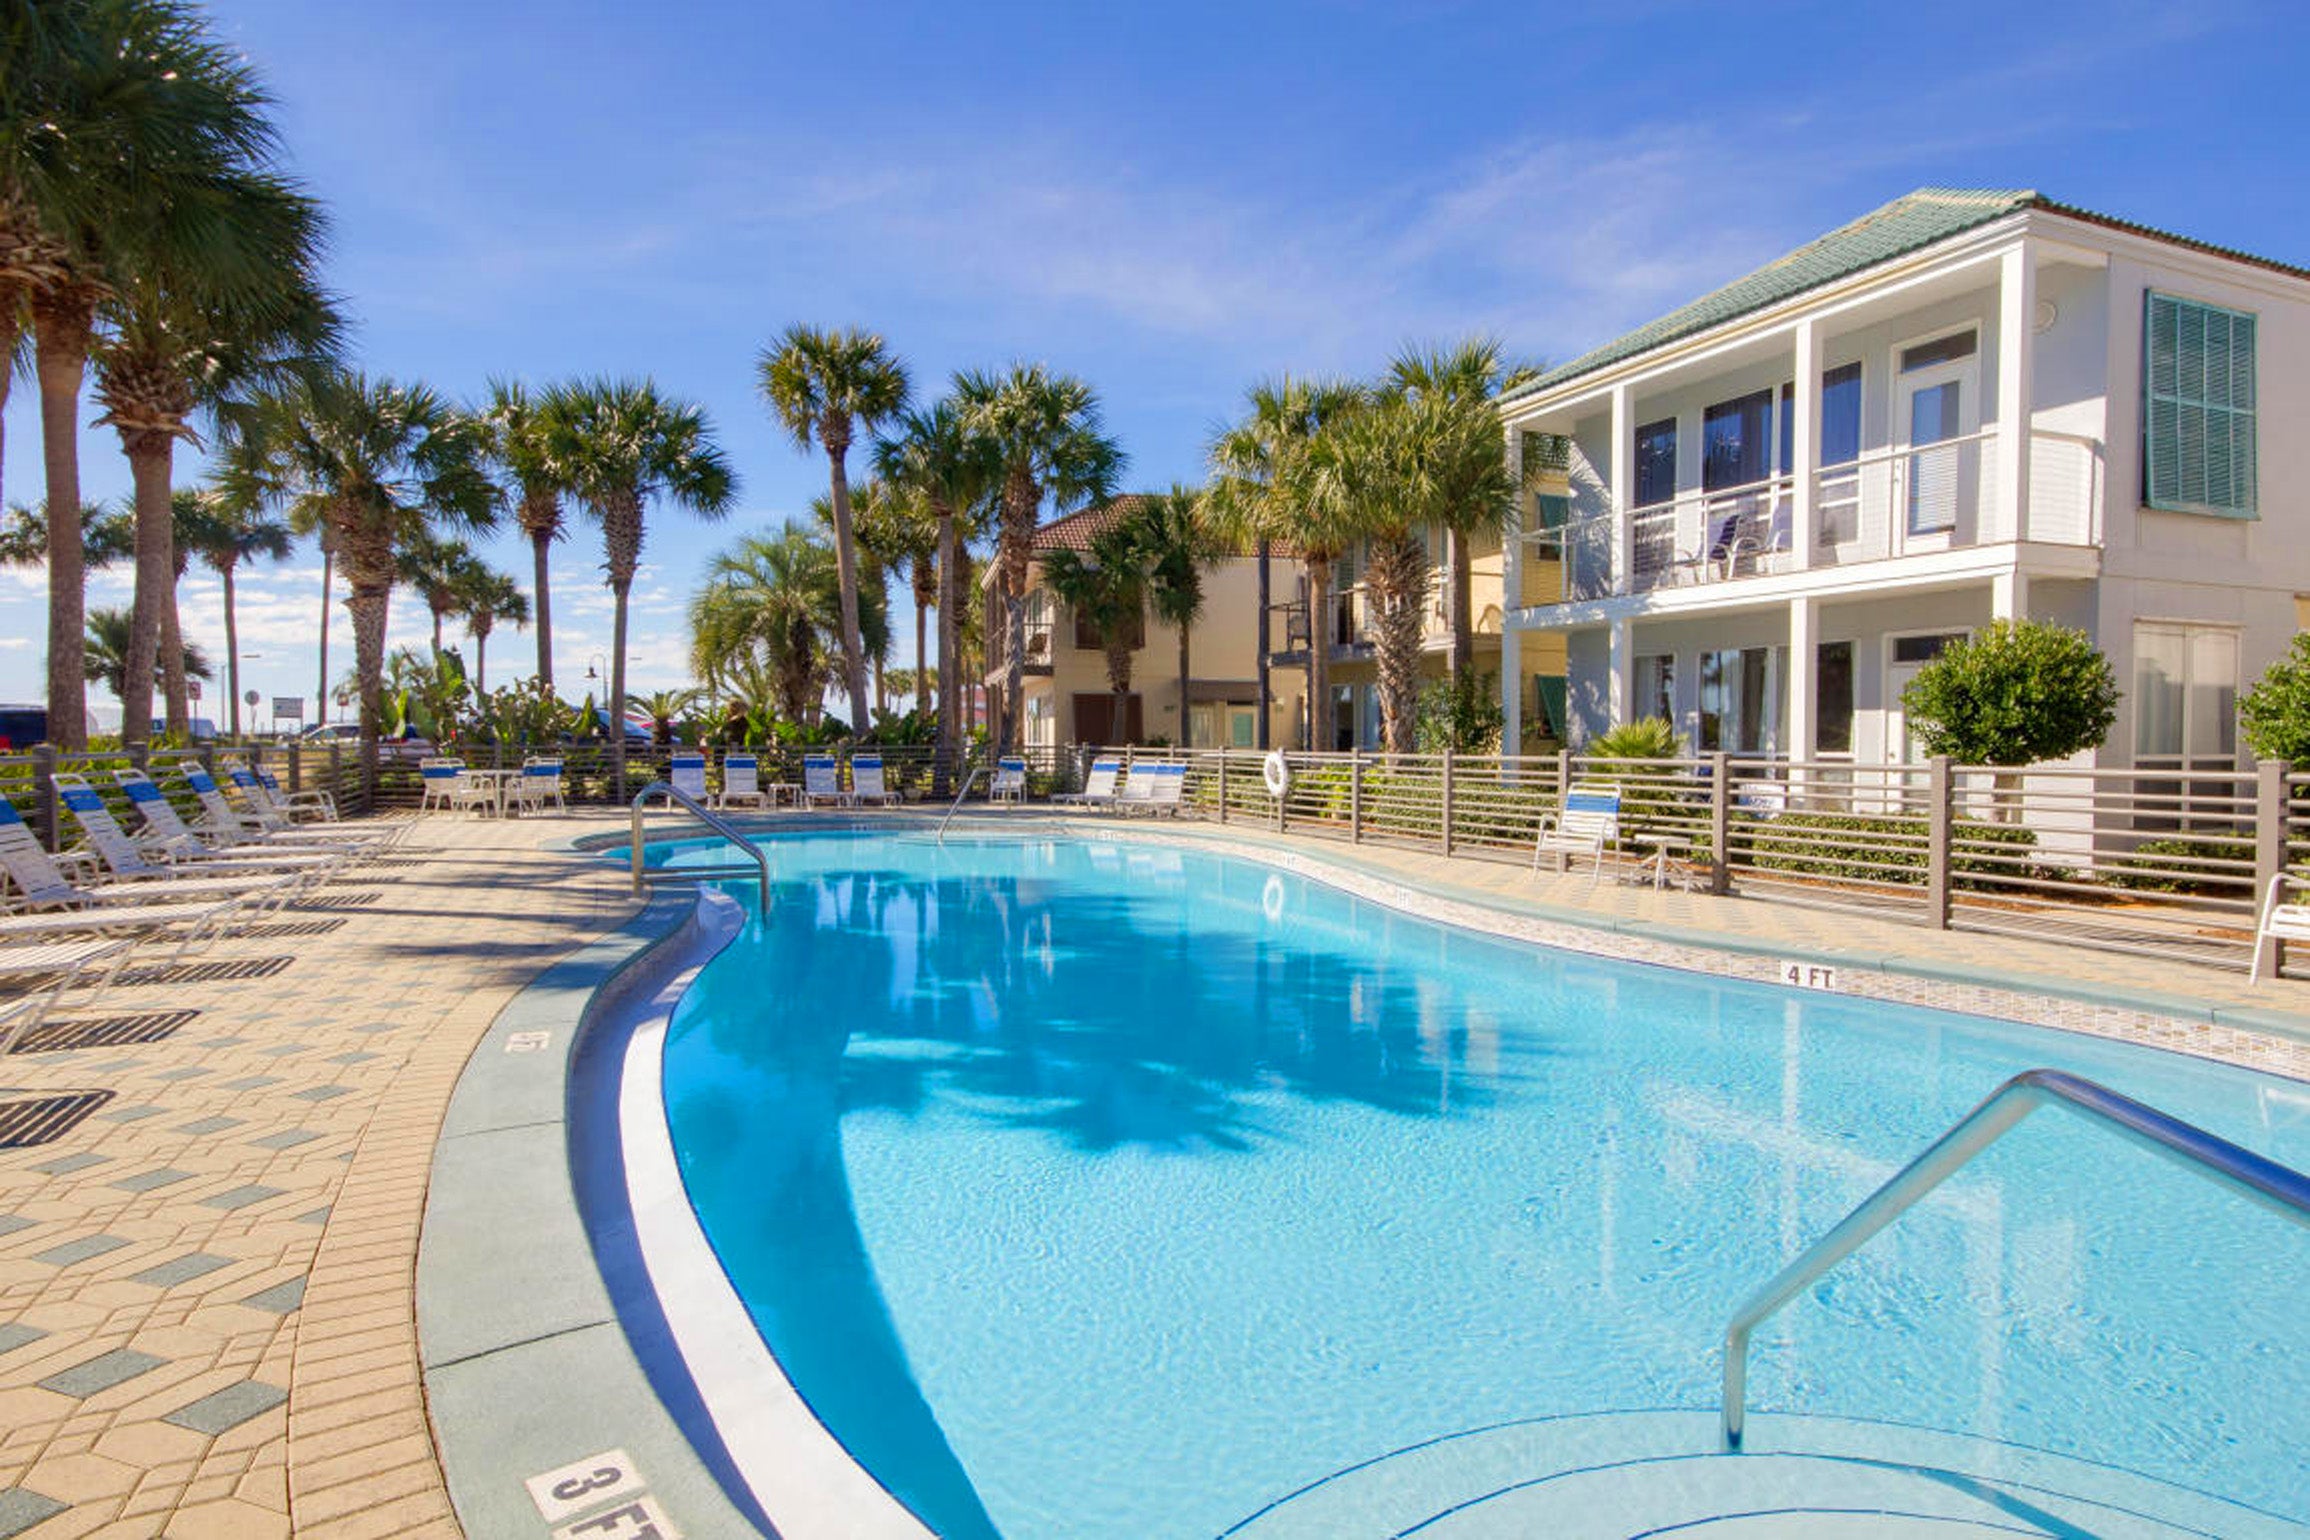 Destiny Beach Villas neighborhood Pool